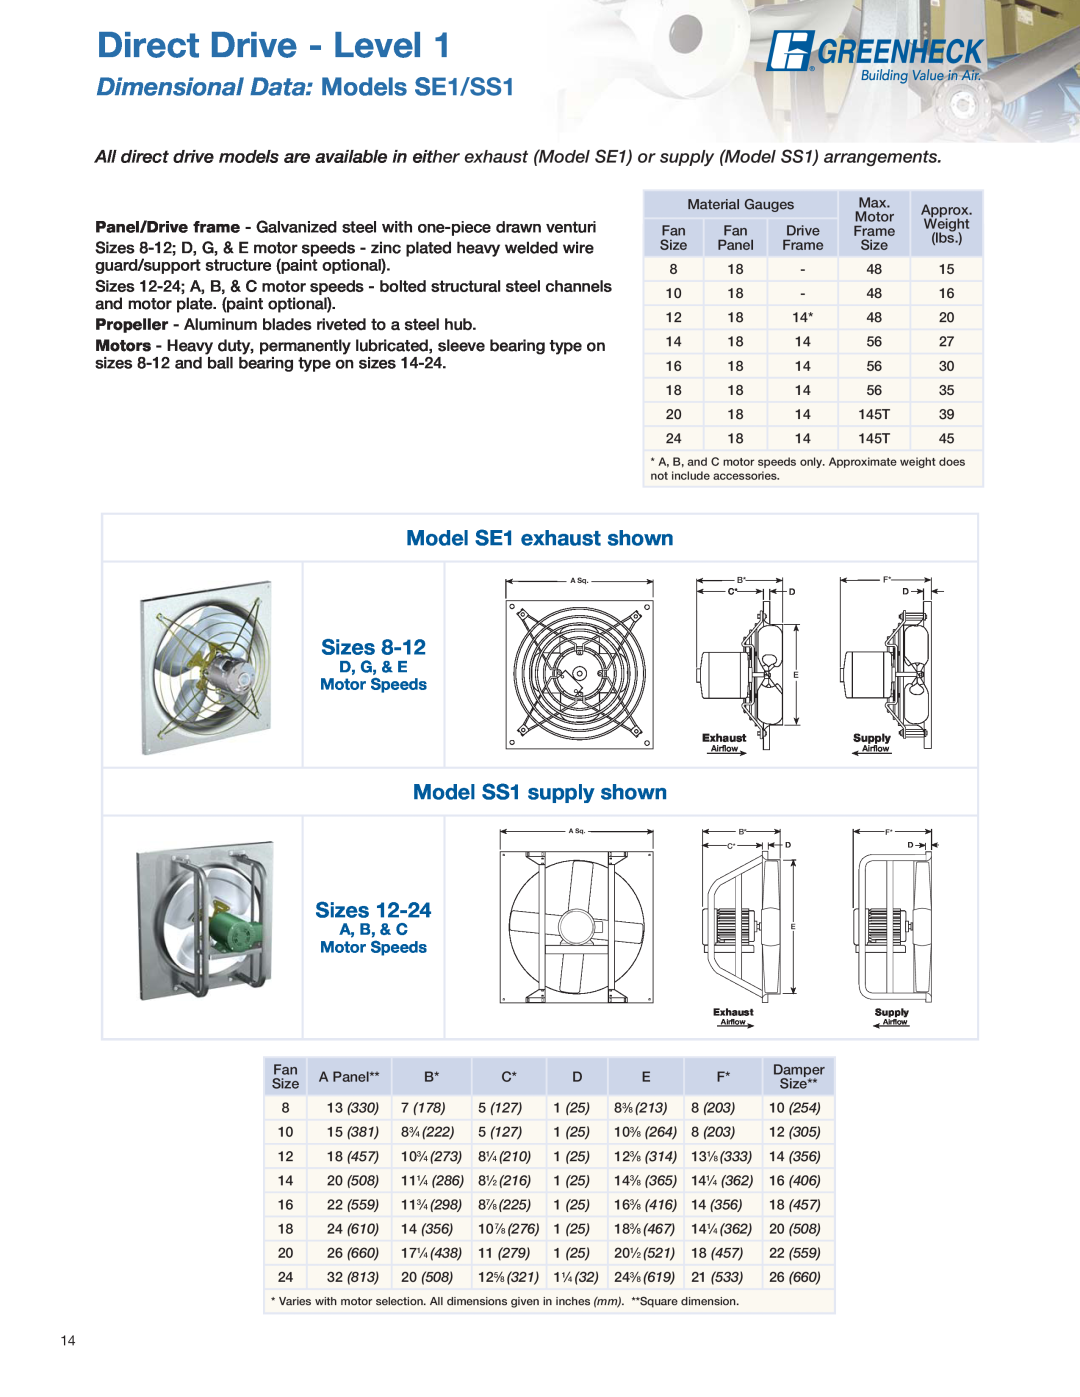 Greenheck Fan manual Direct Drive - Level, Dimensional Data Models SE1/SS1, Model SE1 exhaust shown, Sizes, D, G, & E 